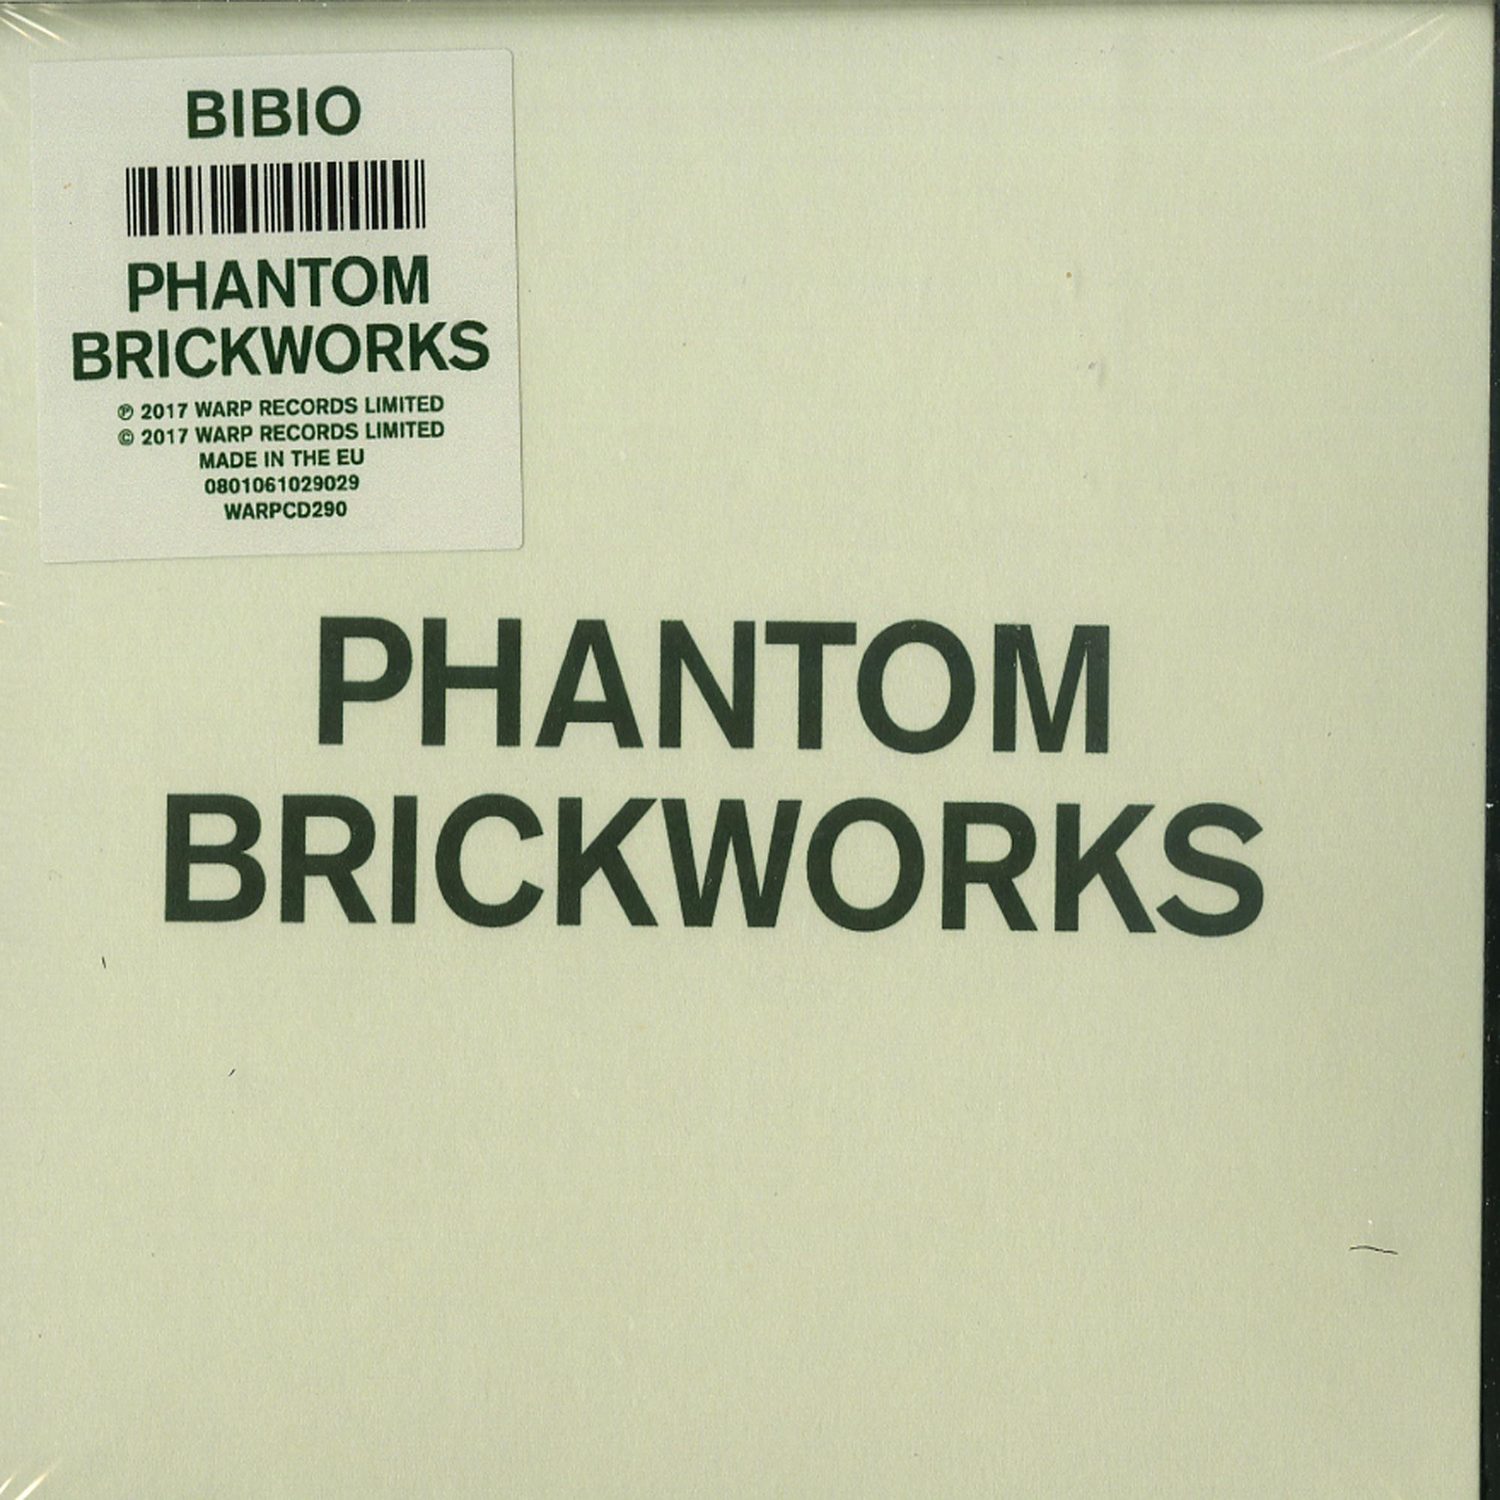 Bibio - PHANTOM BRICKWORKS 